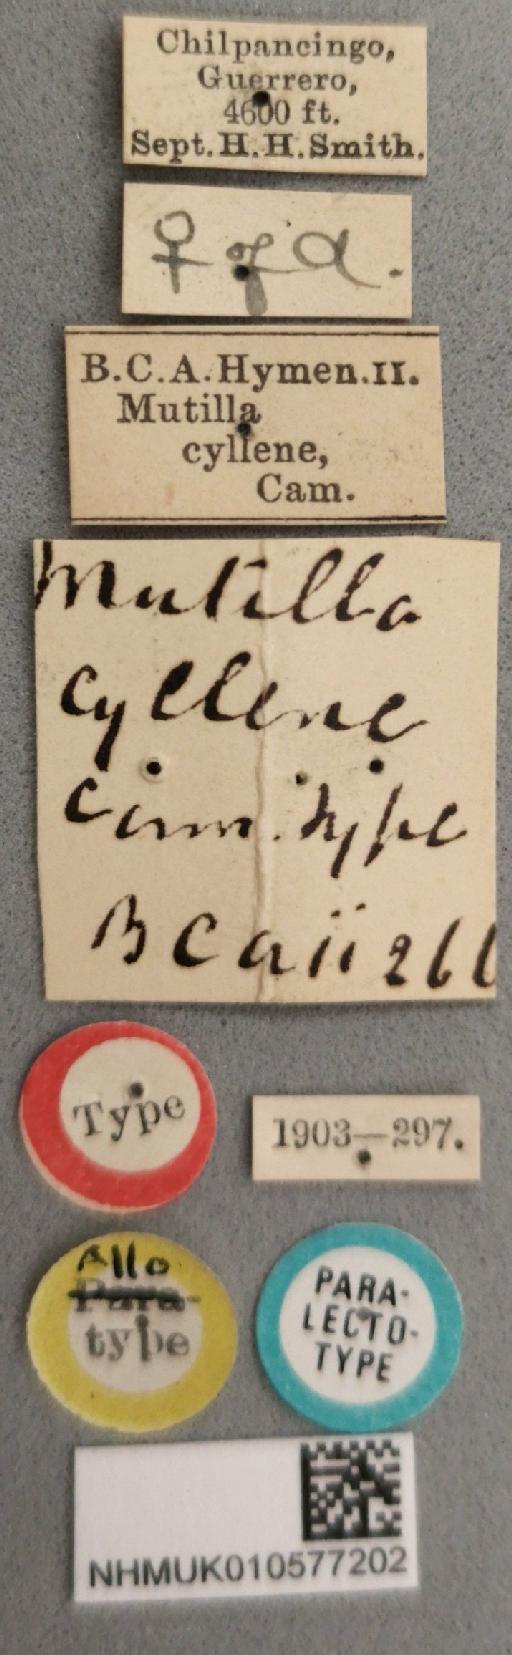 Mutilla cyllene Cameron, P., 1894 - 010577202_Mutilla_cyllene_PLT_labels